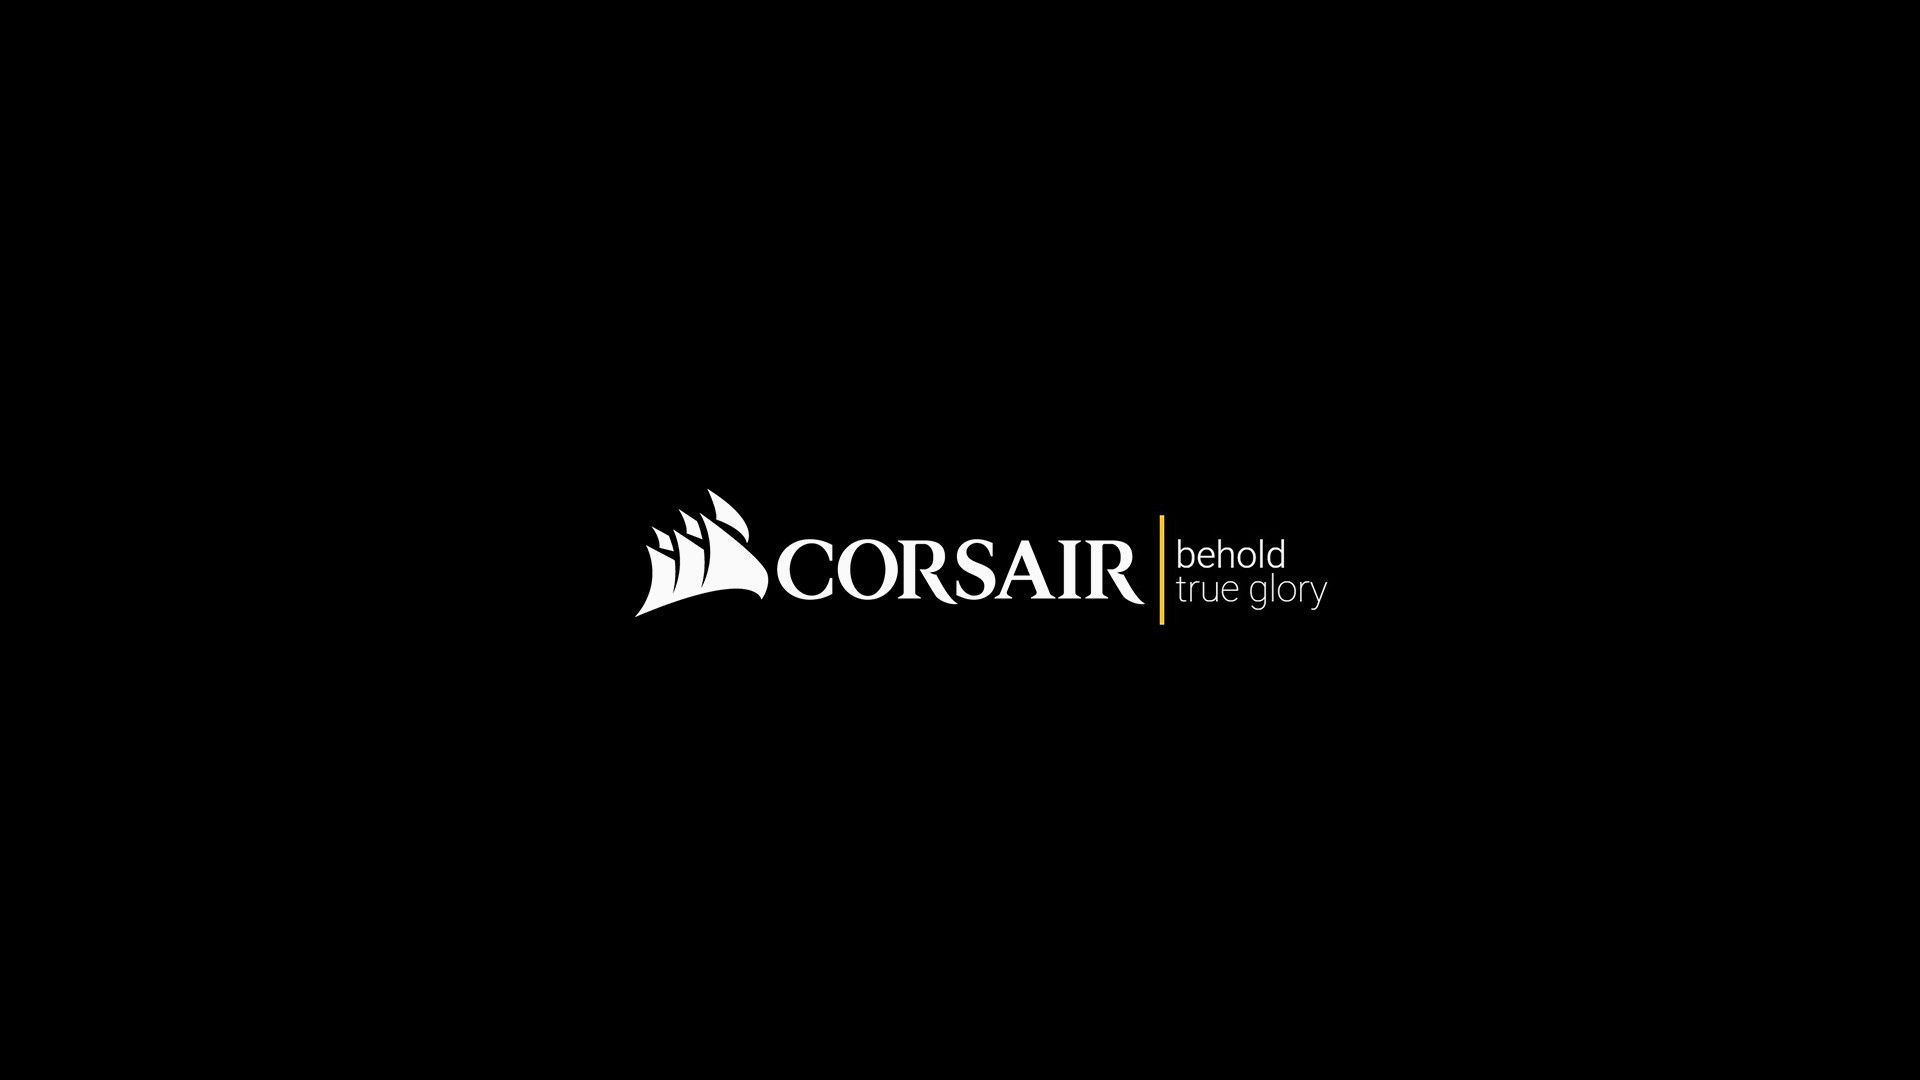 Corsair HD Wallpaper